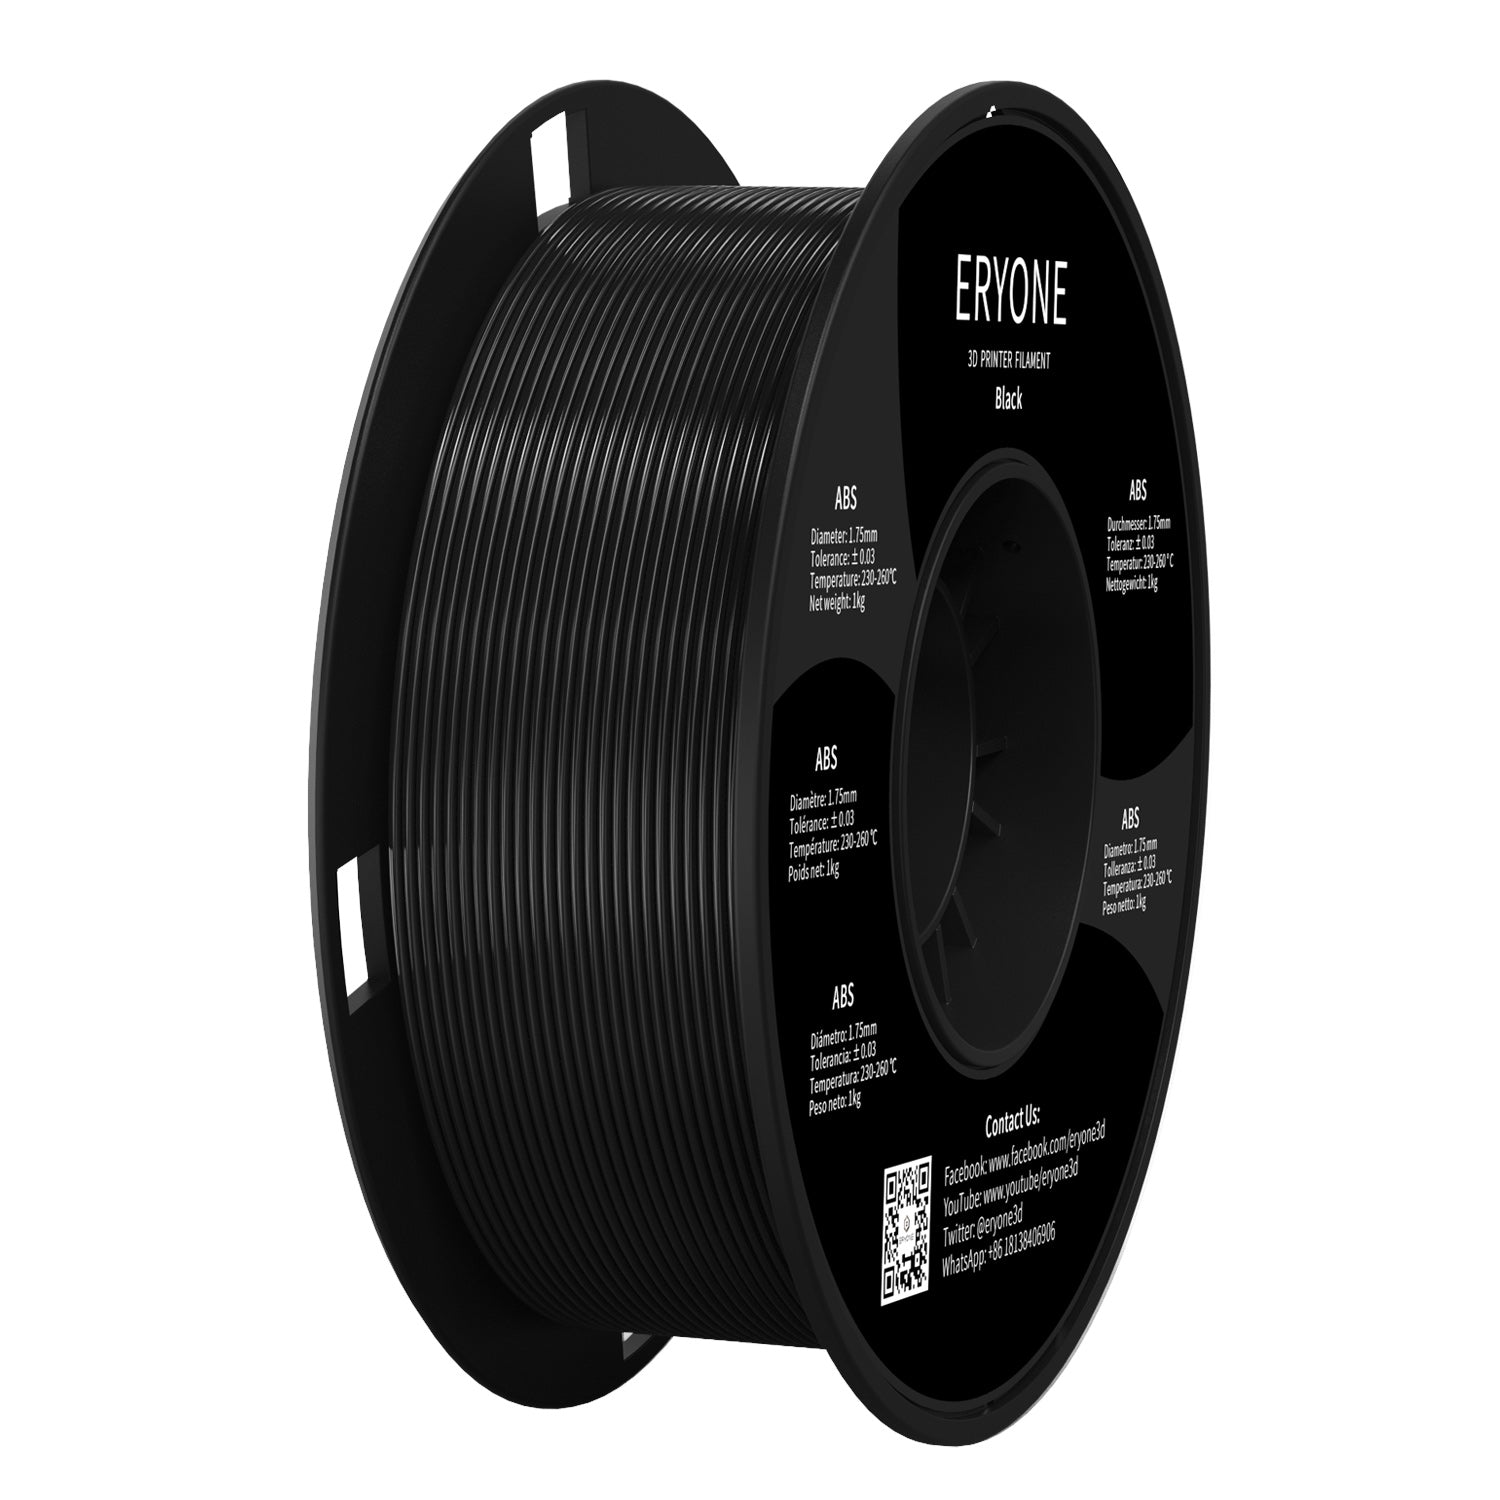 ERYONE ABS 3D Printer Filament 1.75mm, Dimensional Accuracy +/- 0.05 Mm 1kg (2.2LBS)/Spool